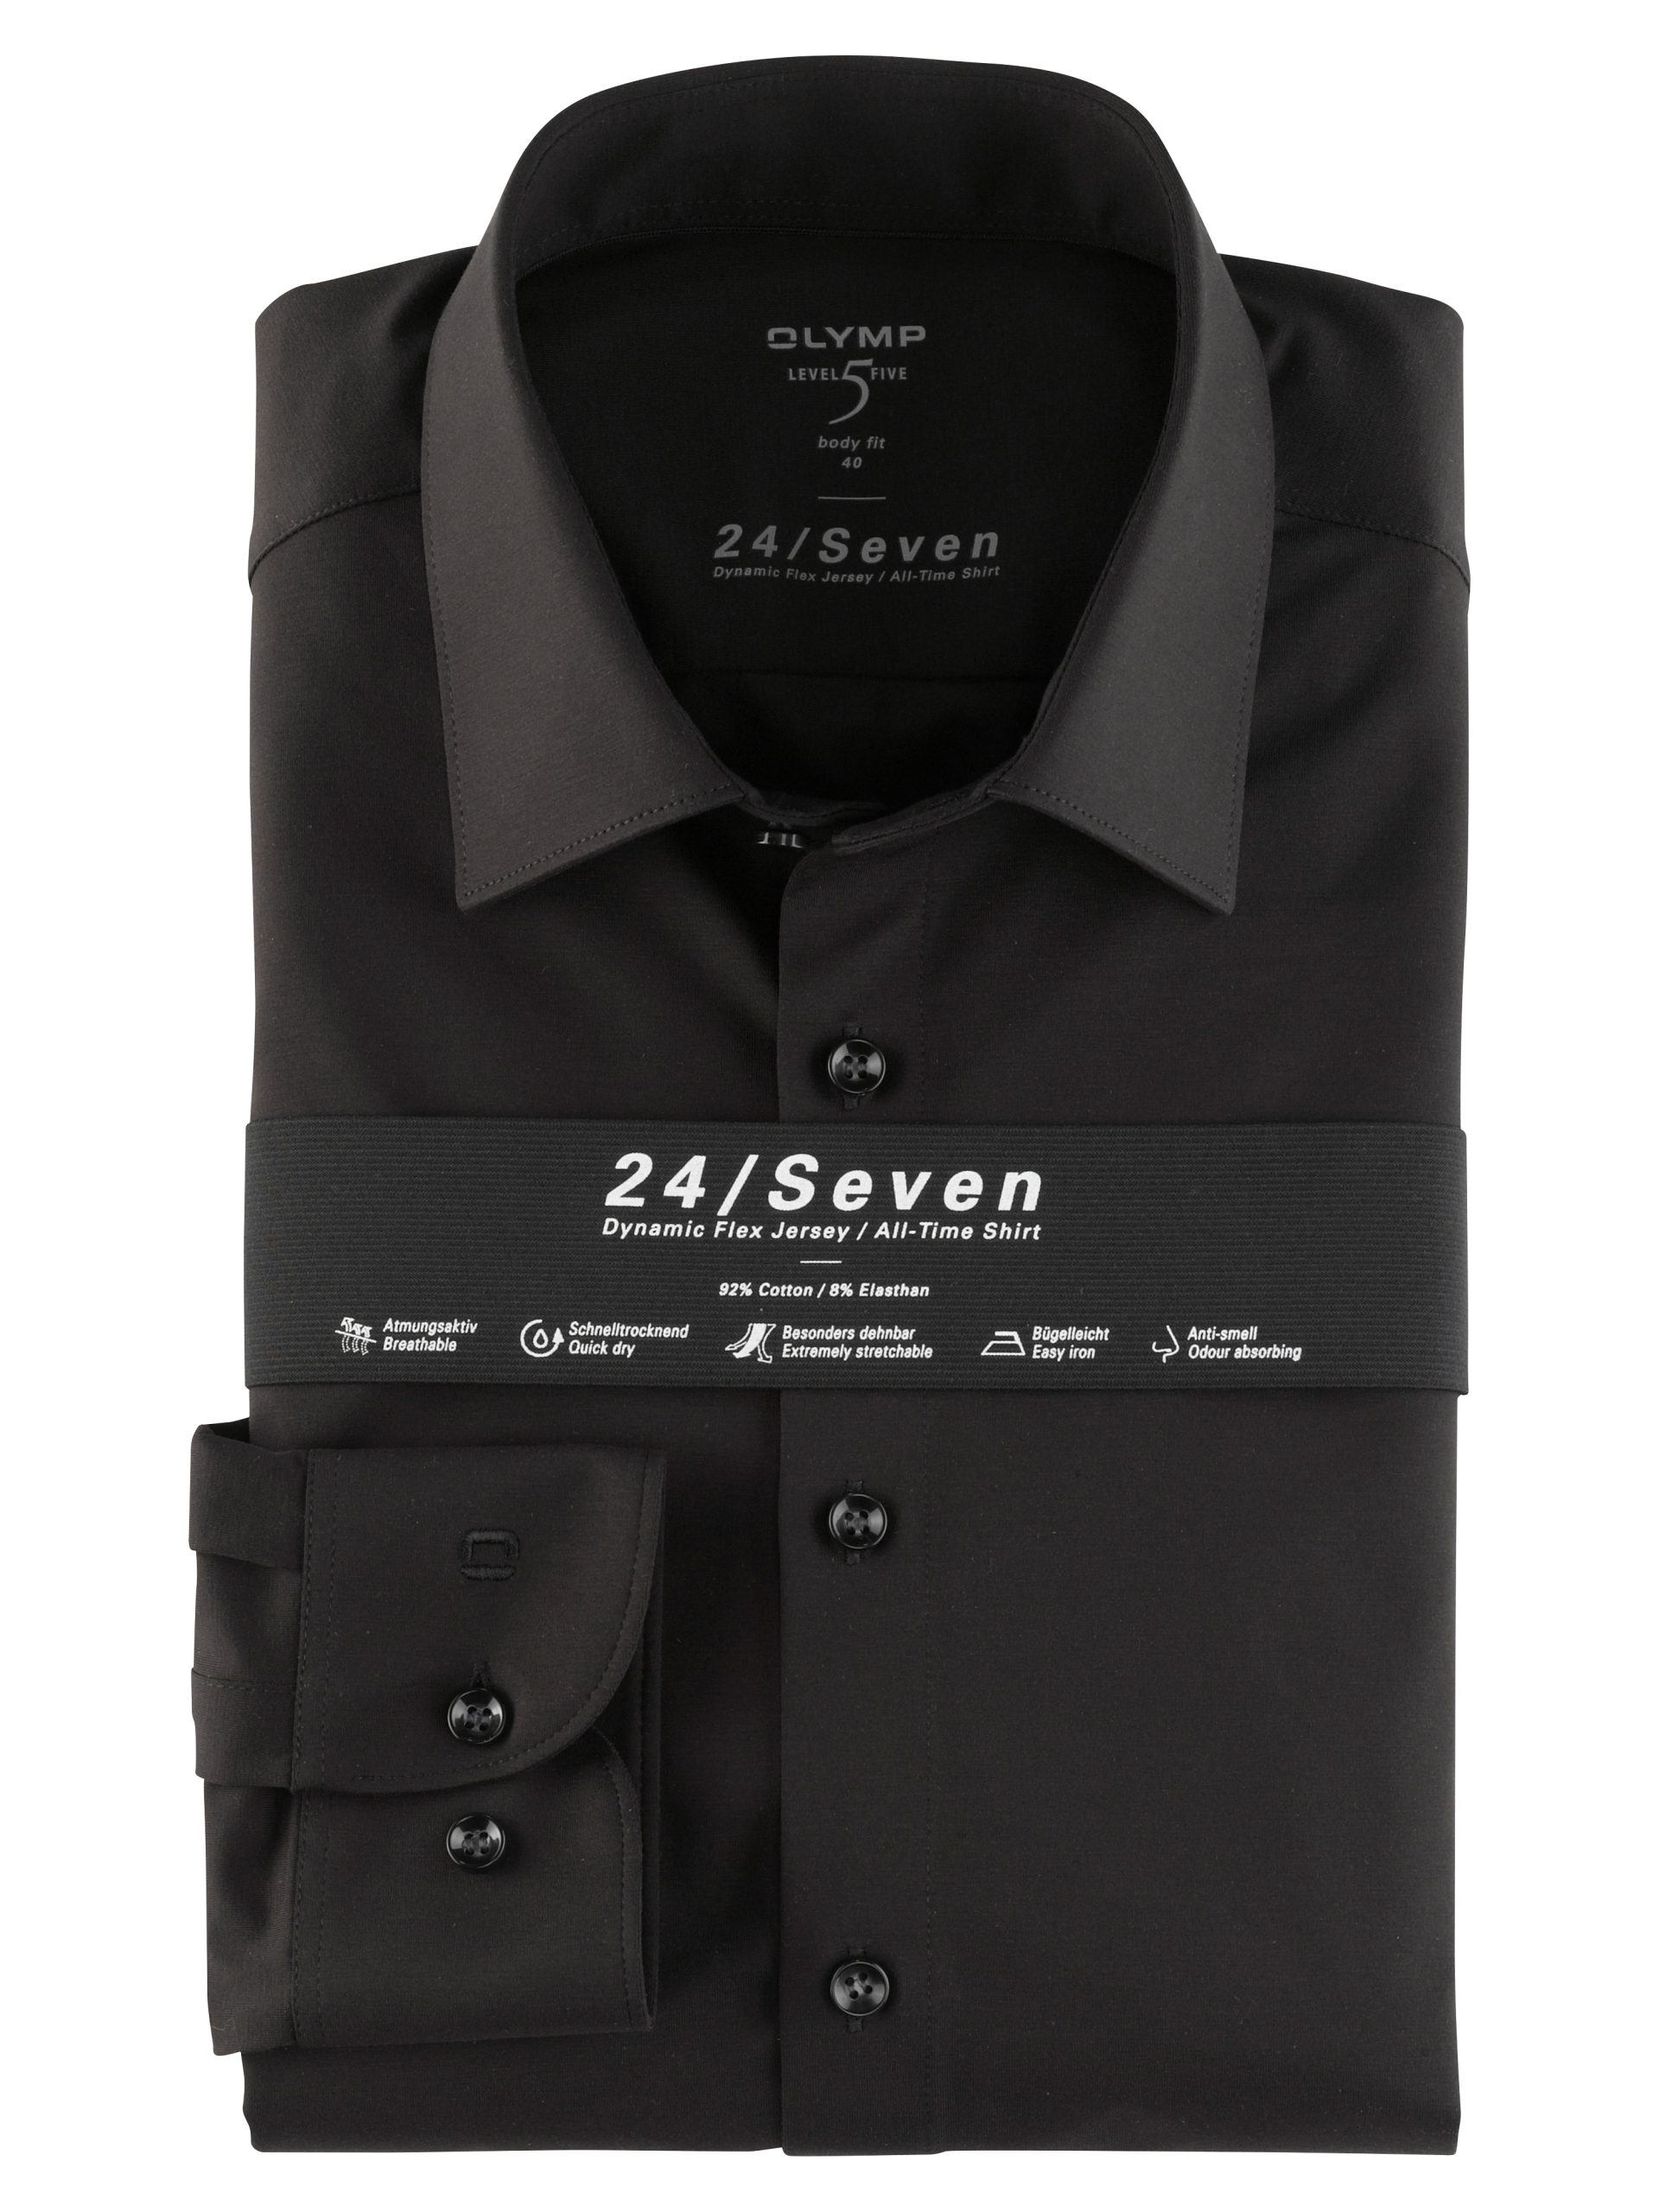 Afbeelding van 200864 68  Level 5 Black Stretch Overhemd Tricot - Olymp